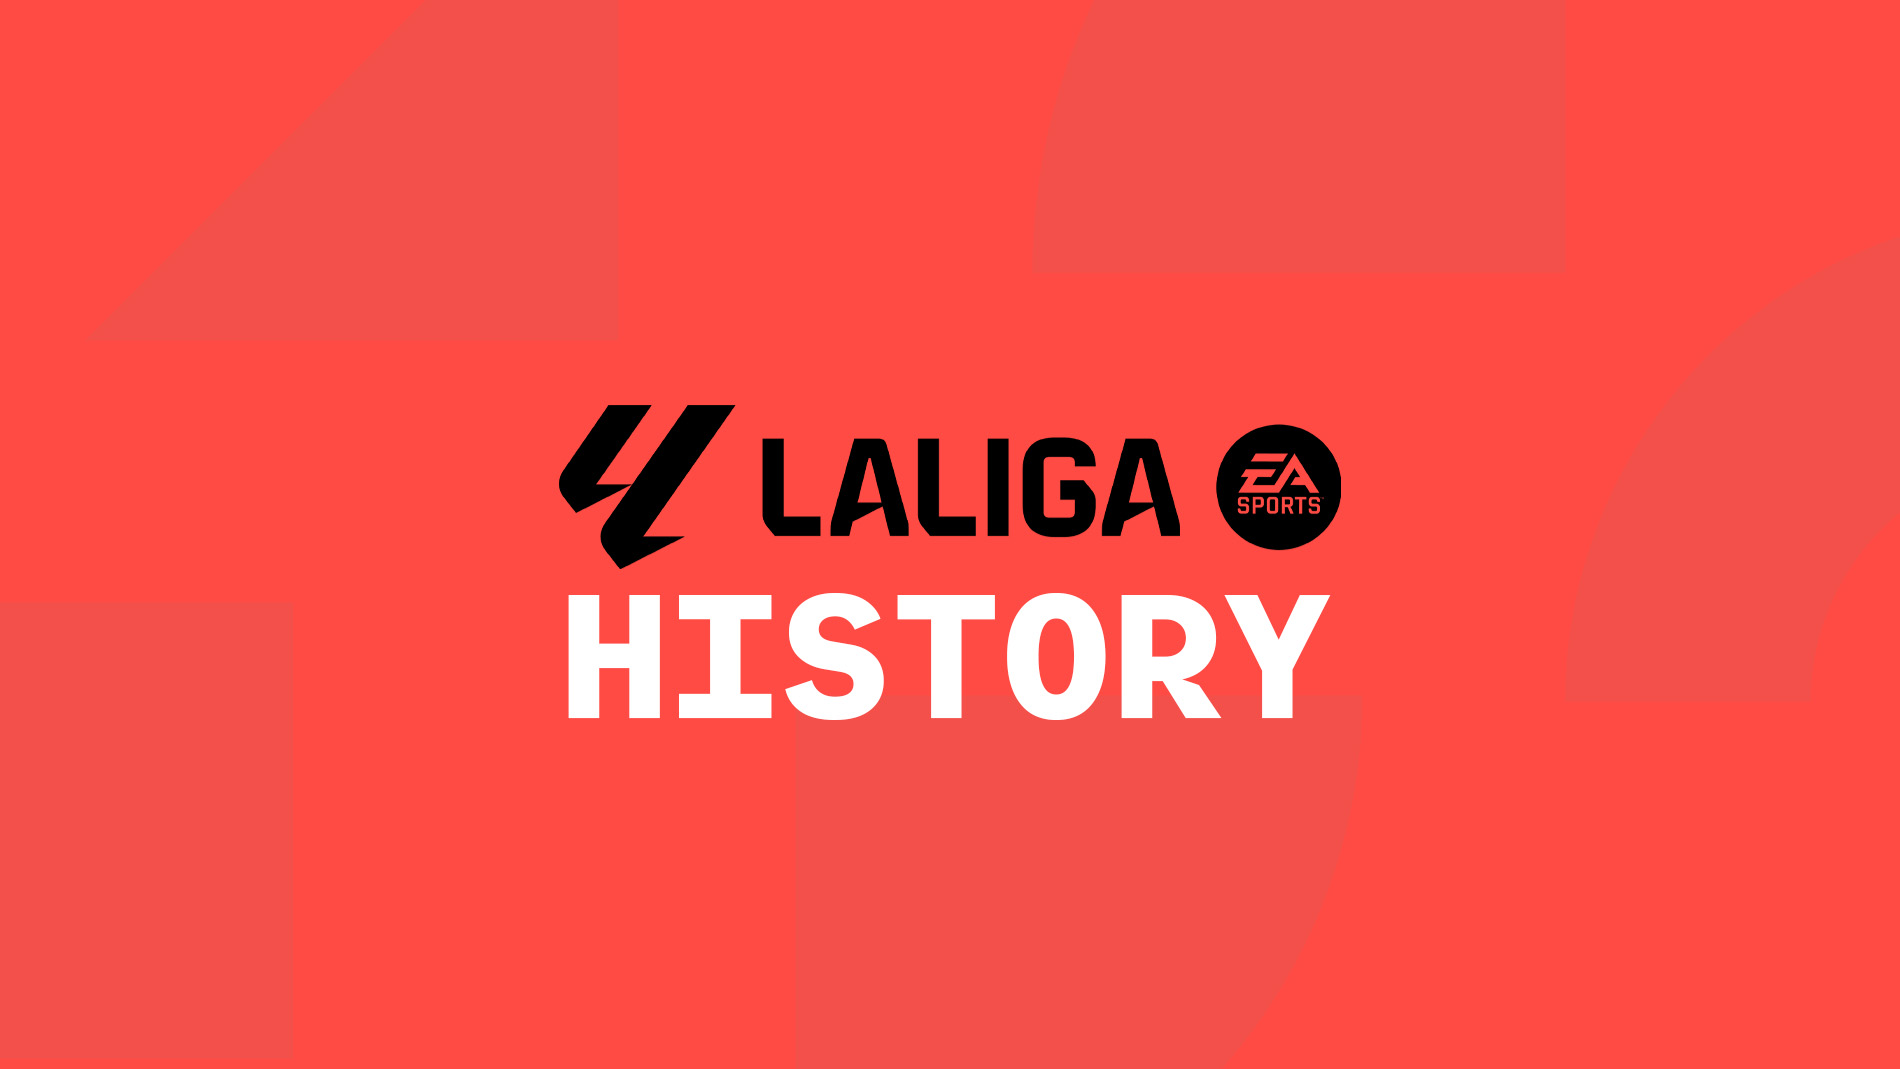 A Comprehensive Look at Spain's La Liga History.